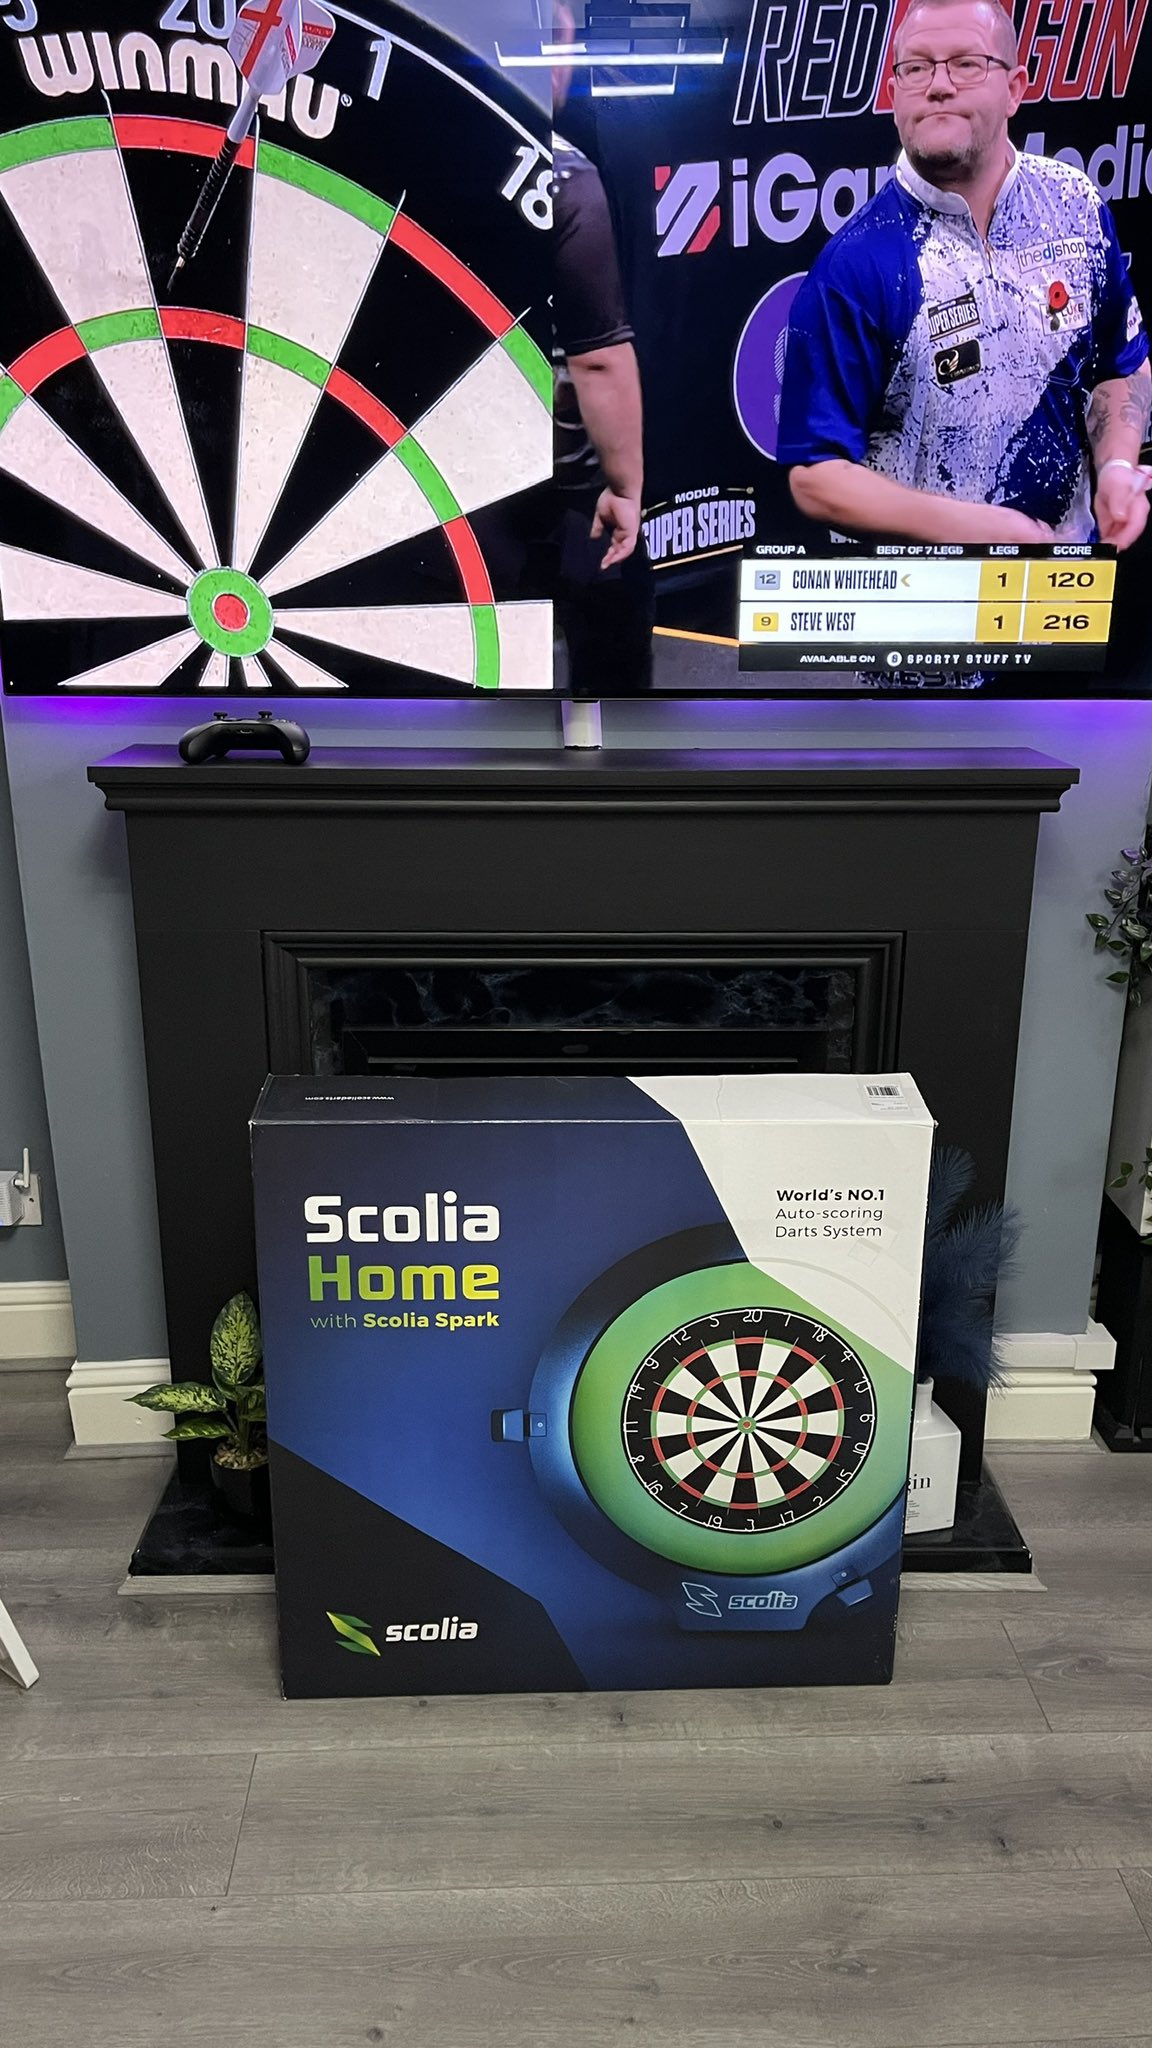 SCOLIA FLEX Home Automatic Scoring System for Steel Tip Darts UK Home  Edition inc spark light – Saint Helens Darts Shop